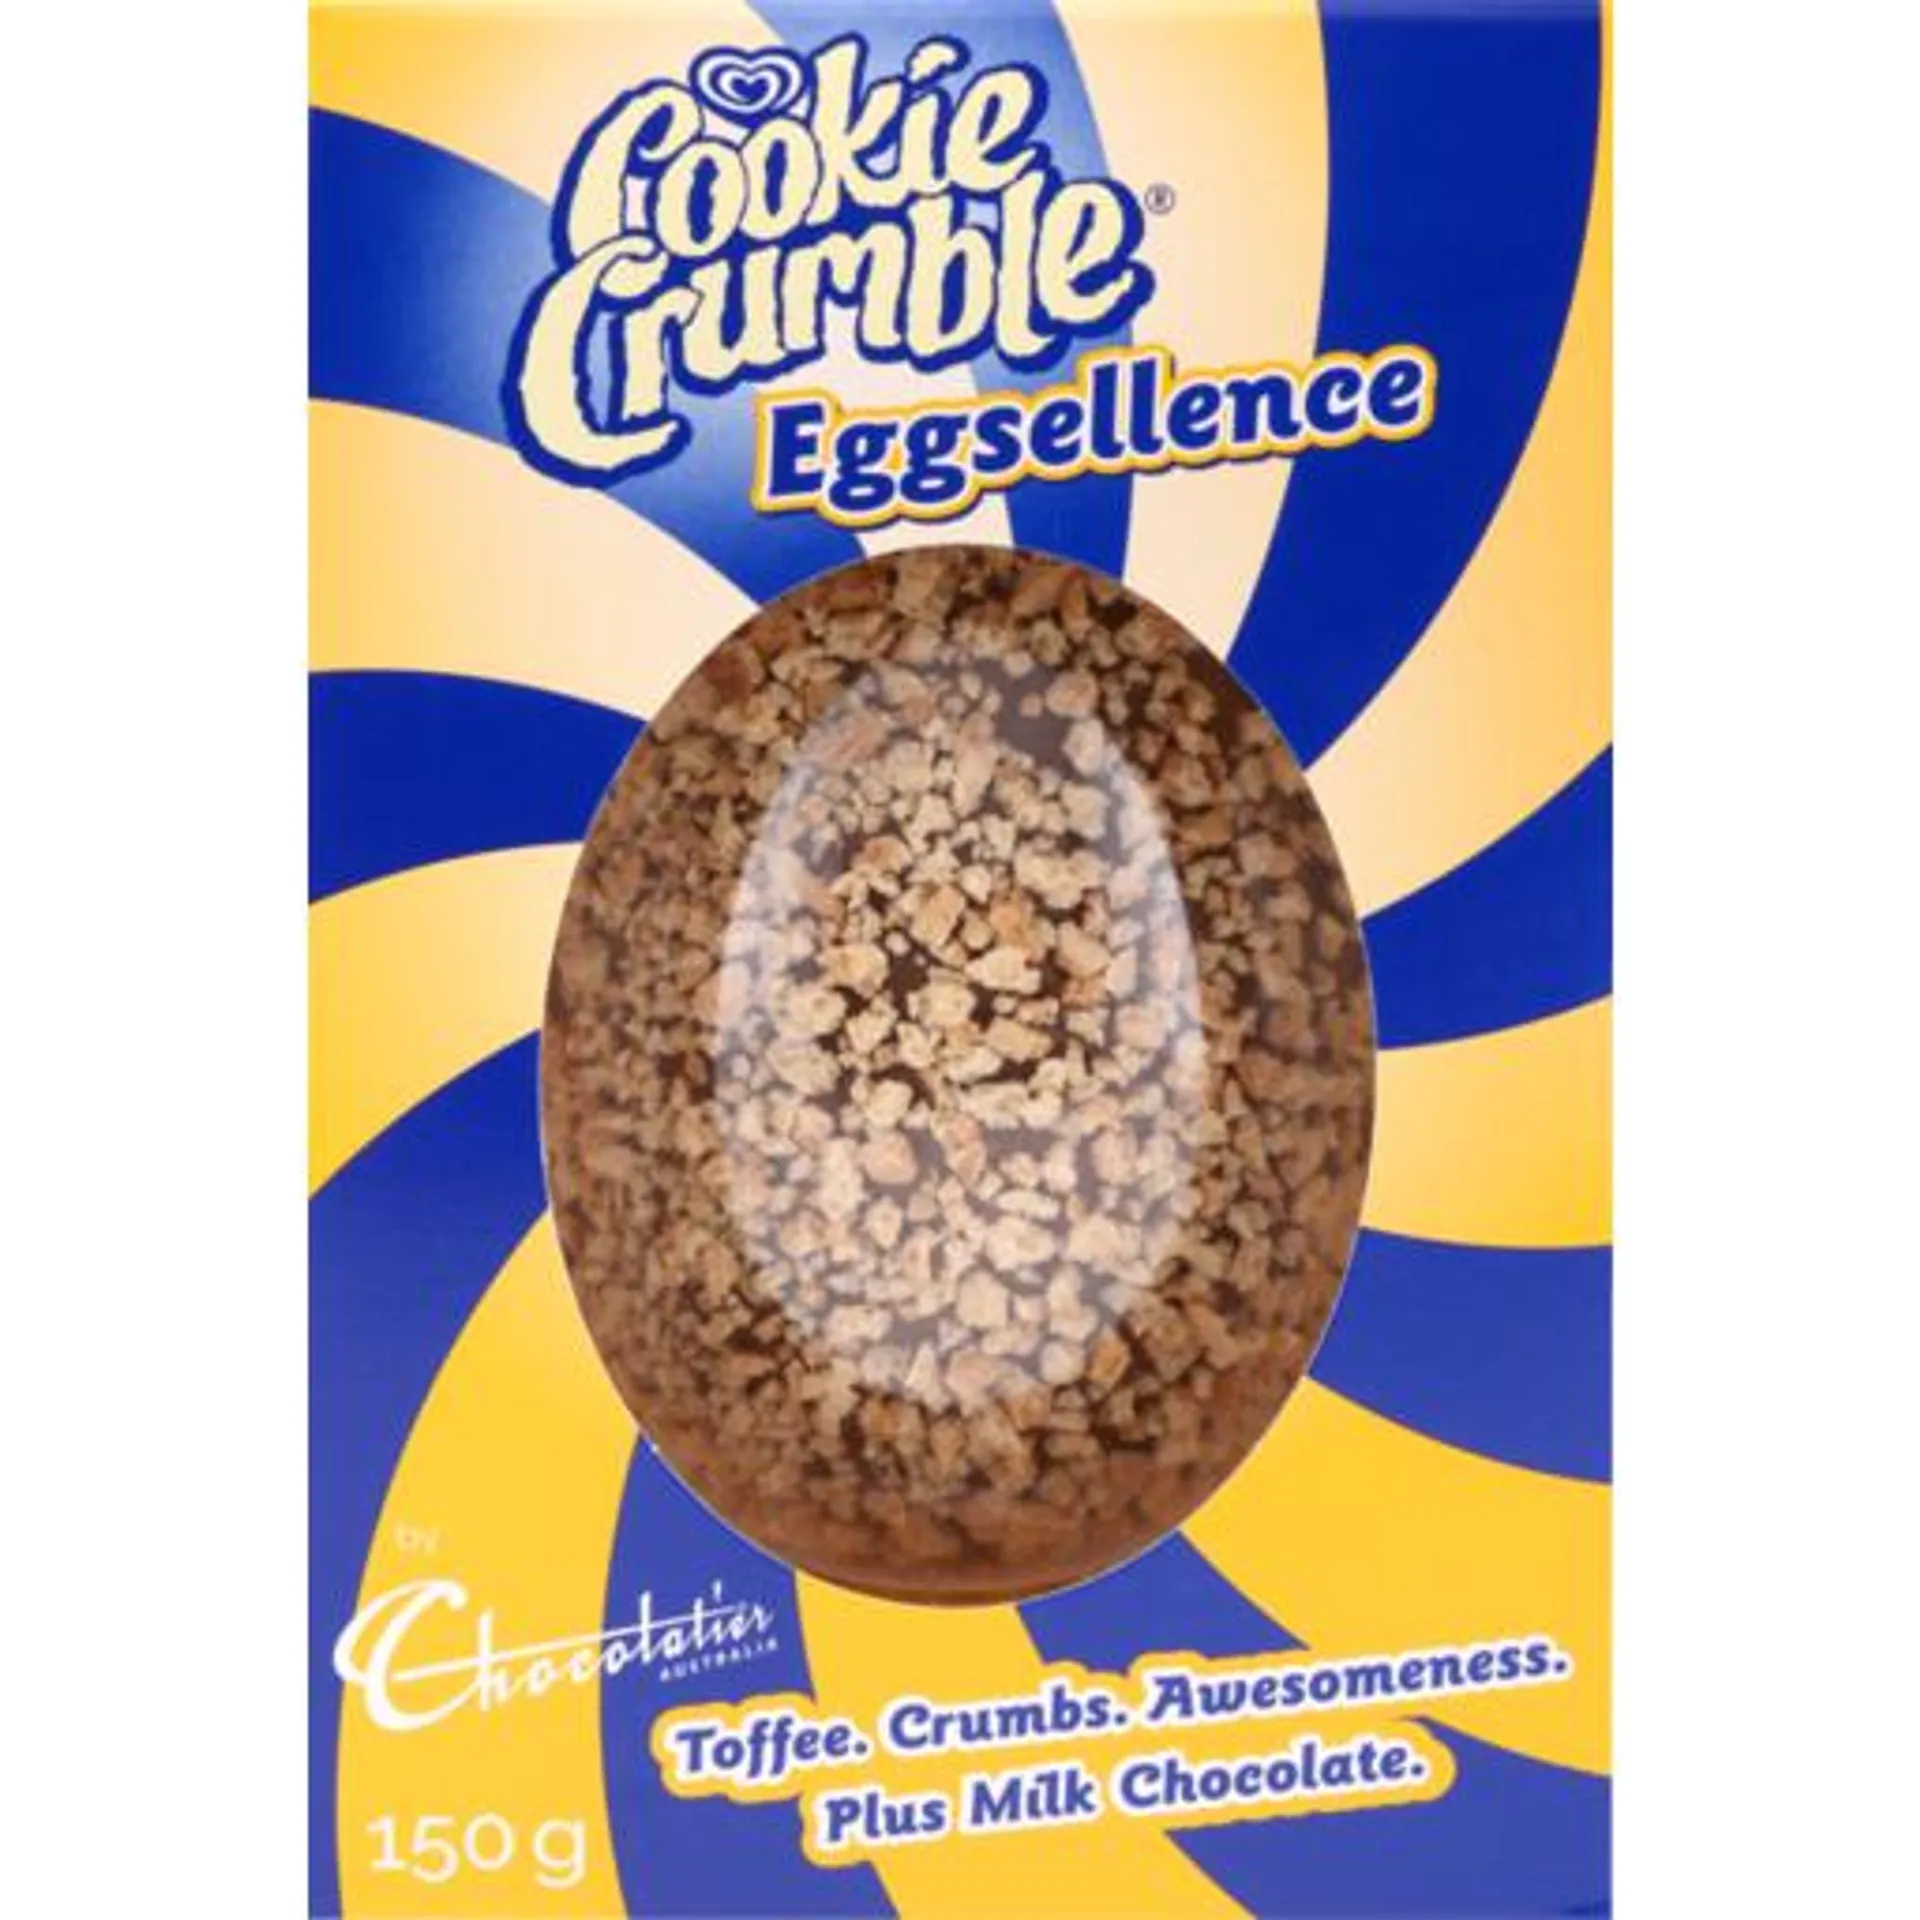 Chocolatier Cookie Crumble Eggsellence 150g